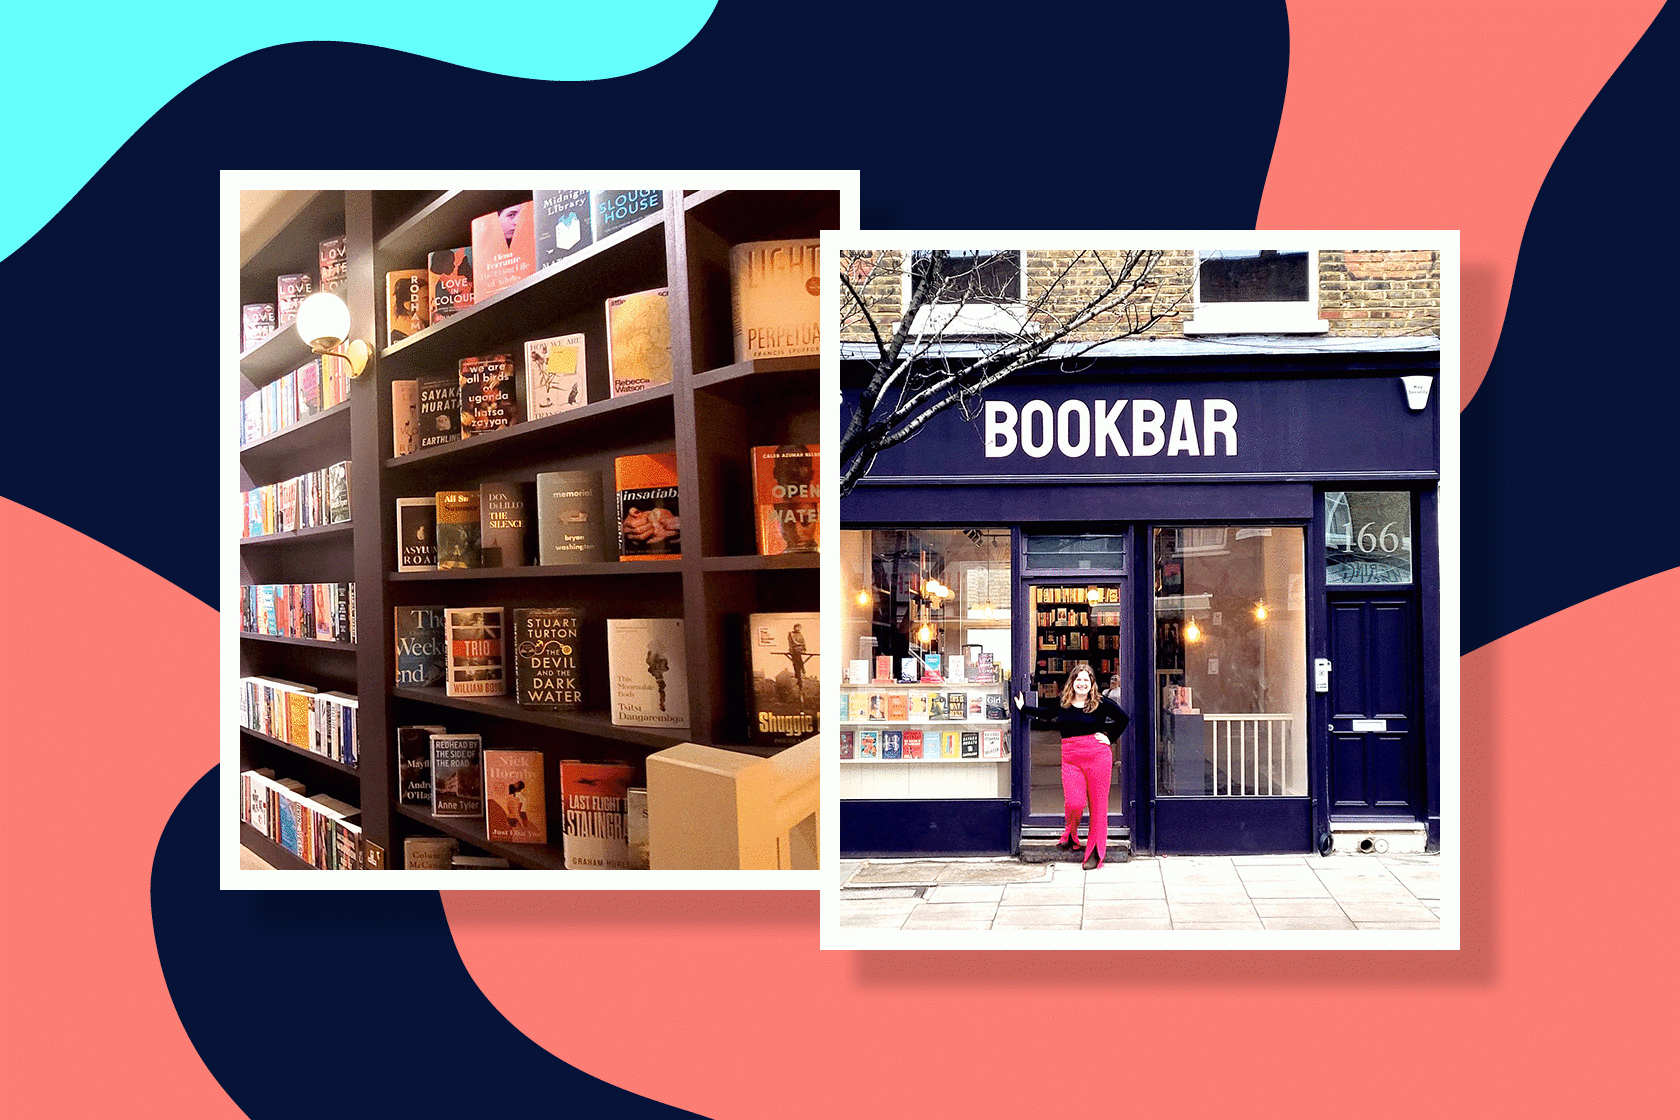 Bookbar book shop interior and exterior